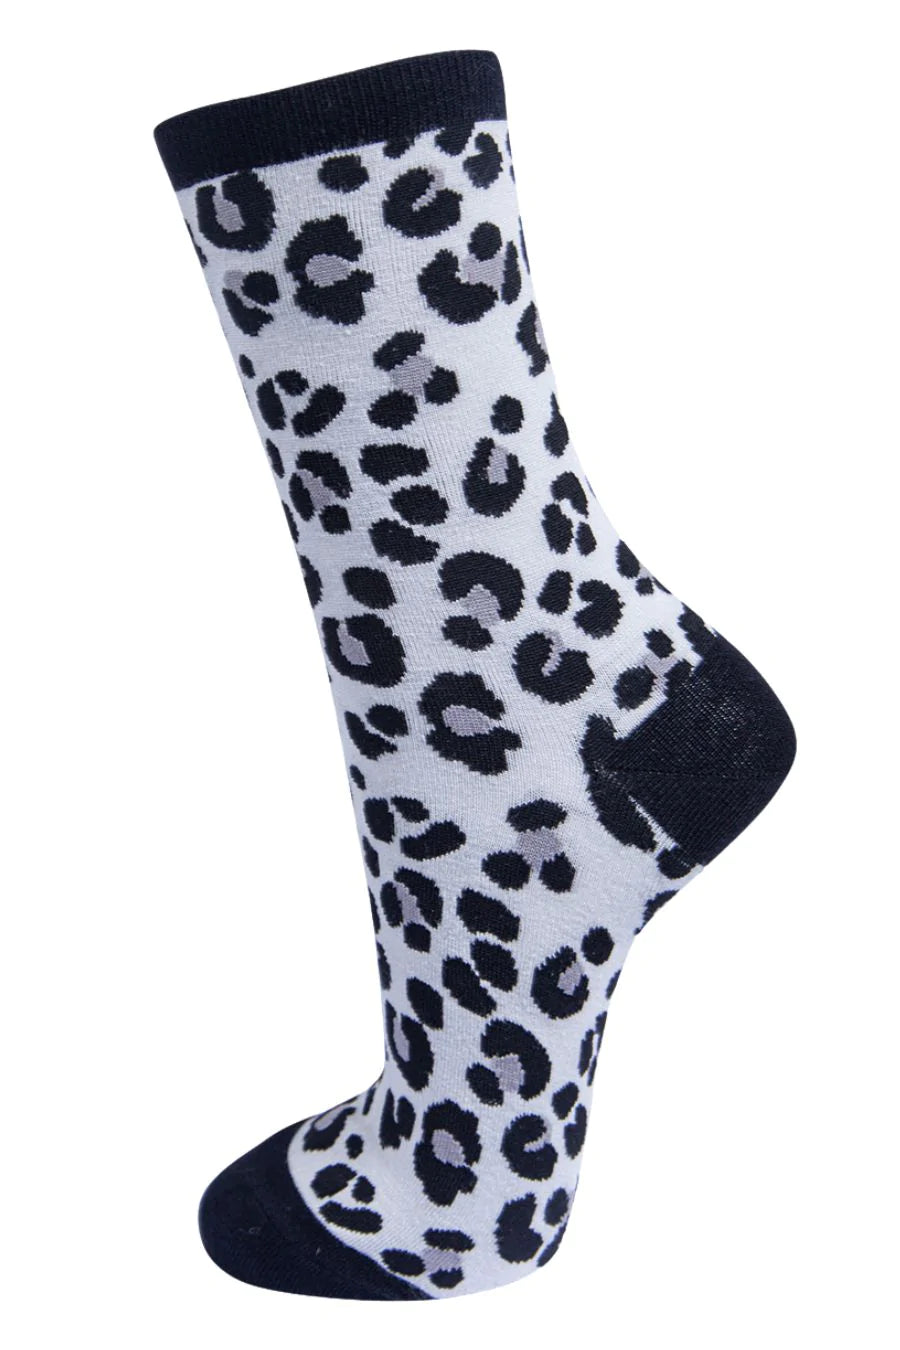 Leopard Print Bamboo Socks - Black/Grey